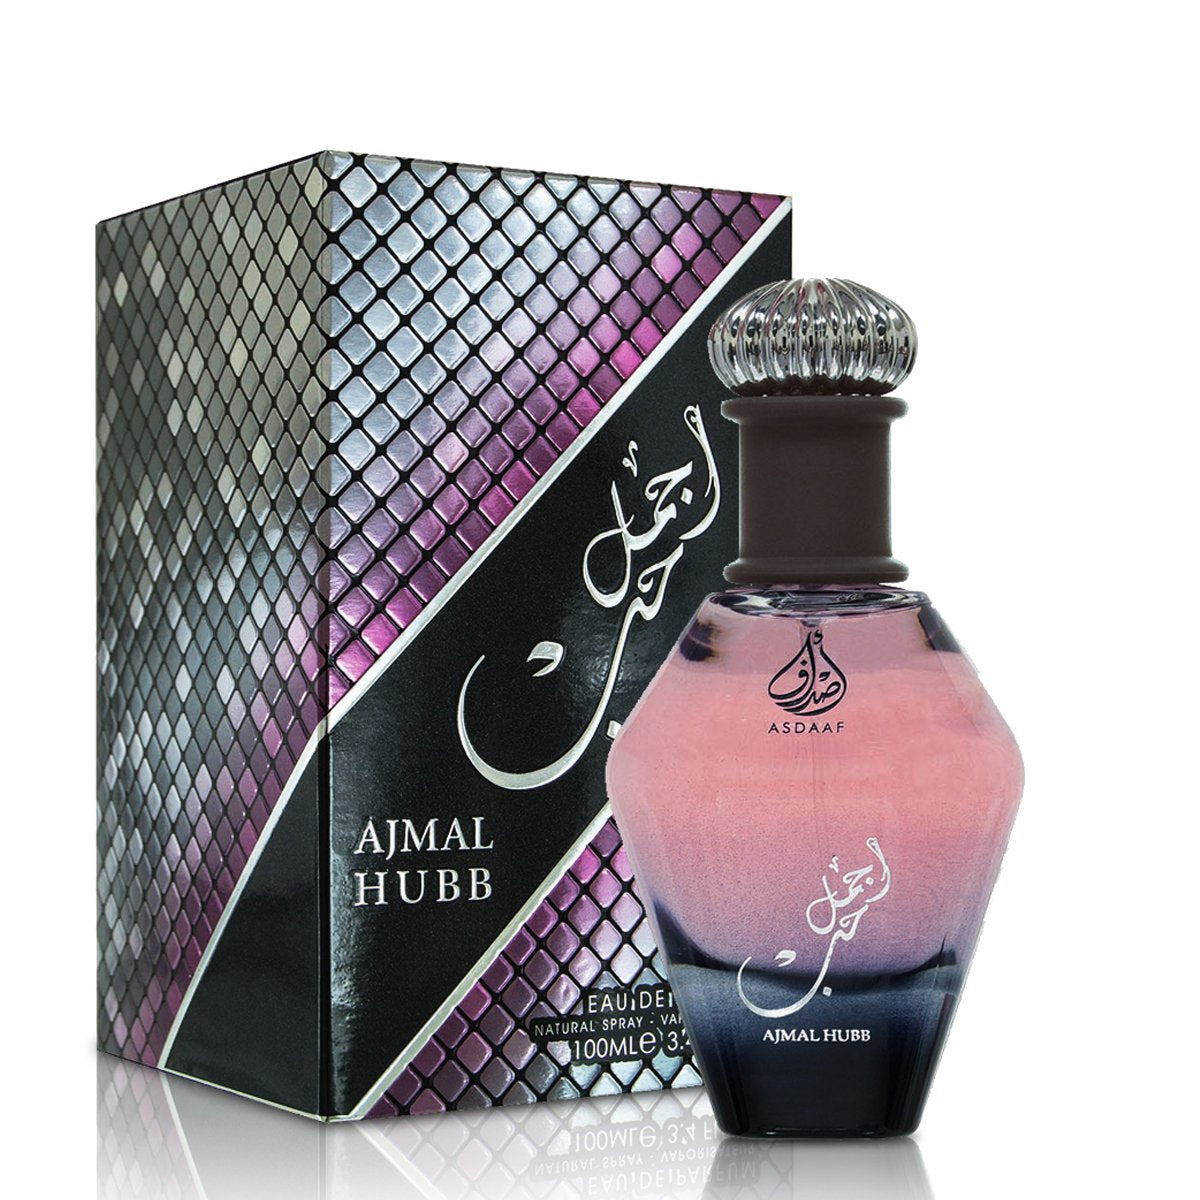 100 ml Eau de Perfume Asdaaf Ajmal Hubb Fragancia jazmín Leñoso para Mujeres